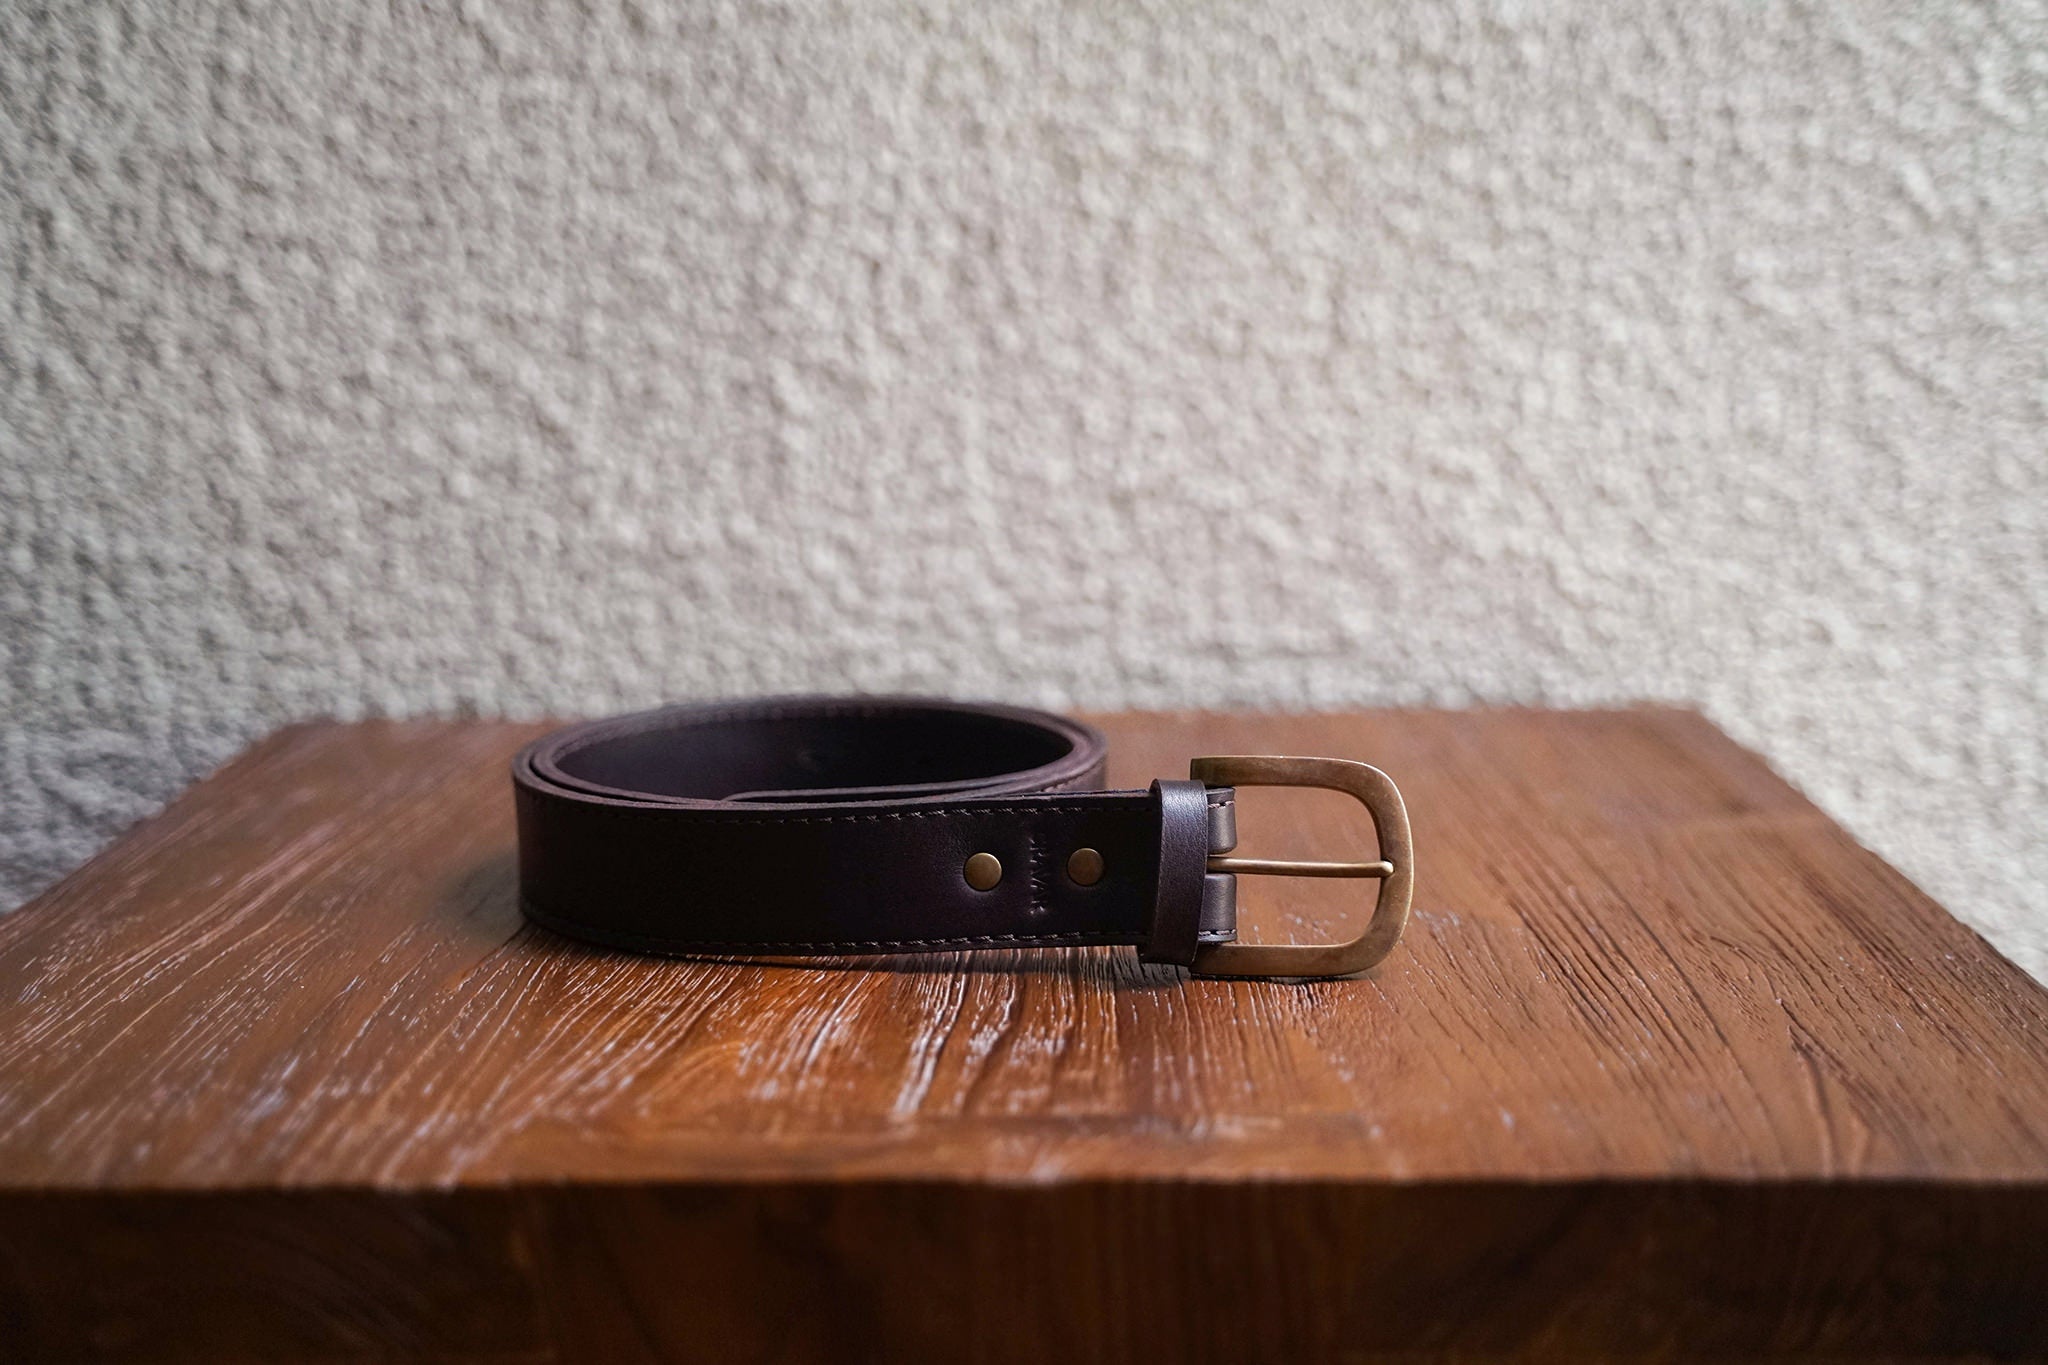 Everyday Leather Belt 40mm/Espresso